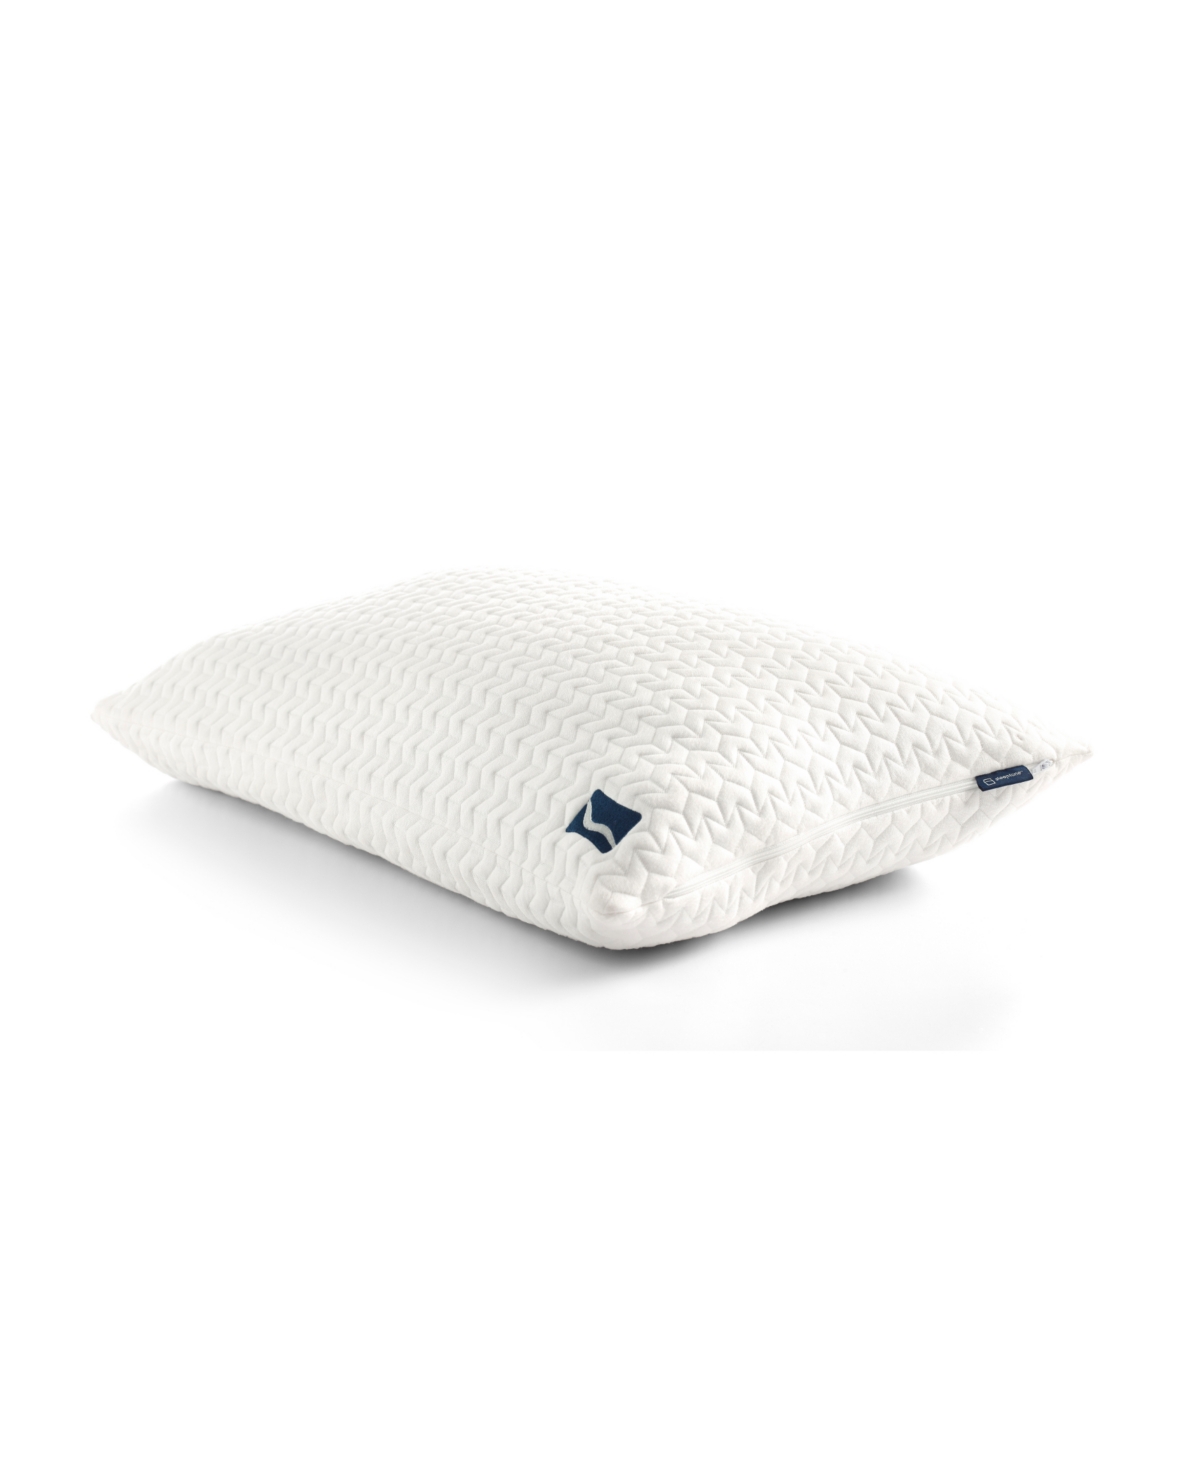 Sleeptone Innovative Multi Position Non-slip Adjustable Pillow, King In White